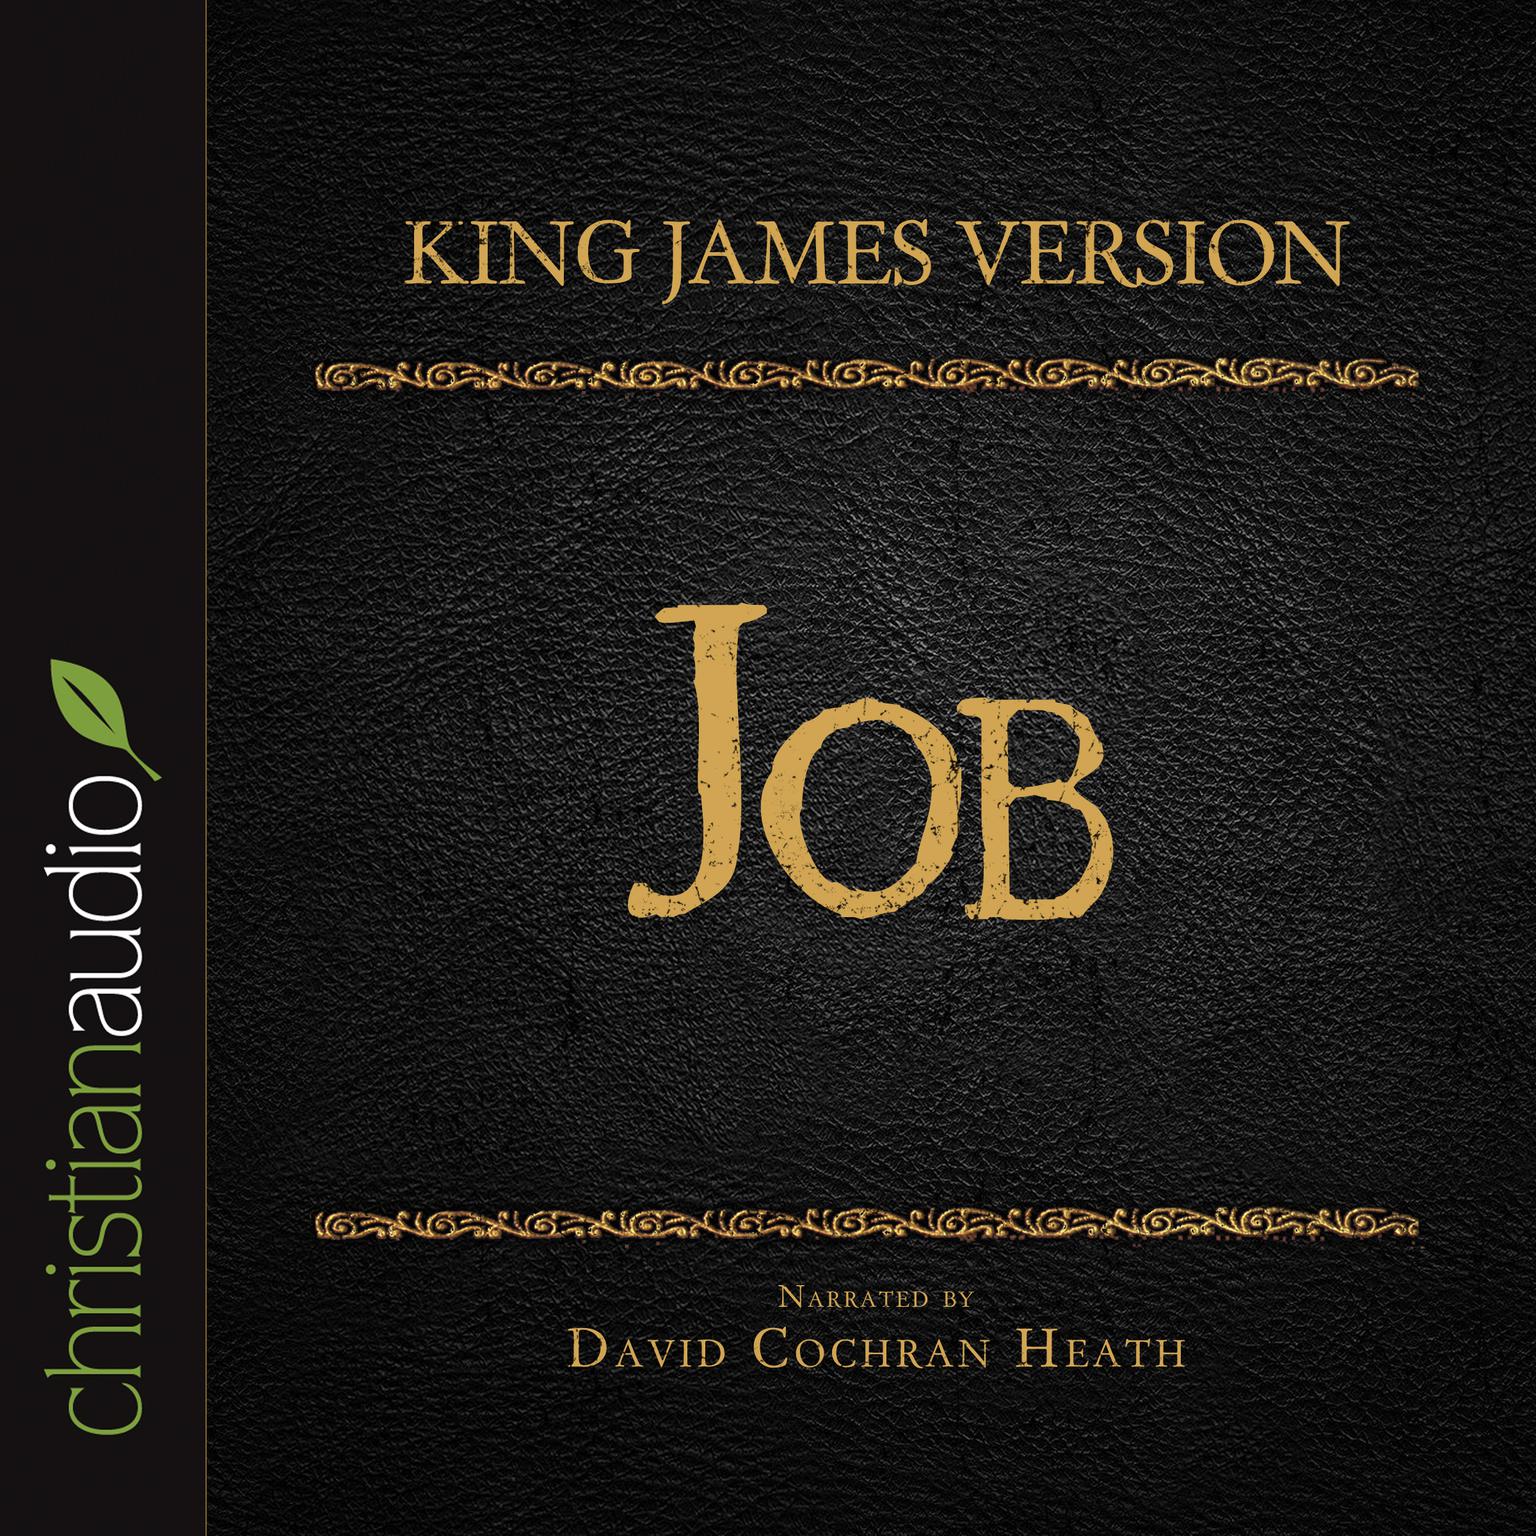 Holy Bible in Audio - King James Version: Job Audiobook, by David Cochran Heath